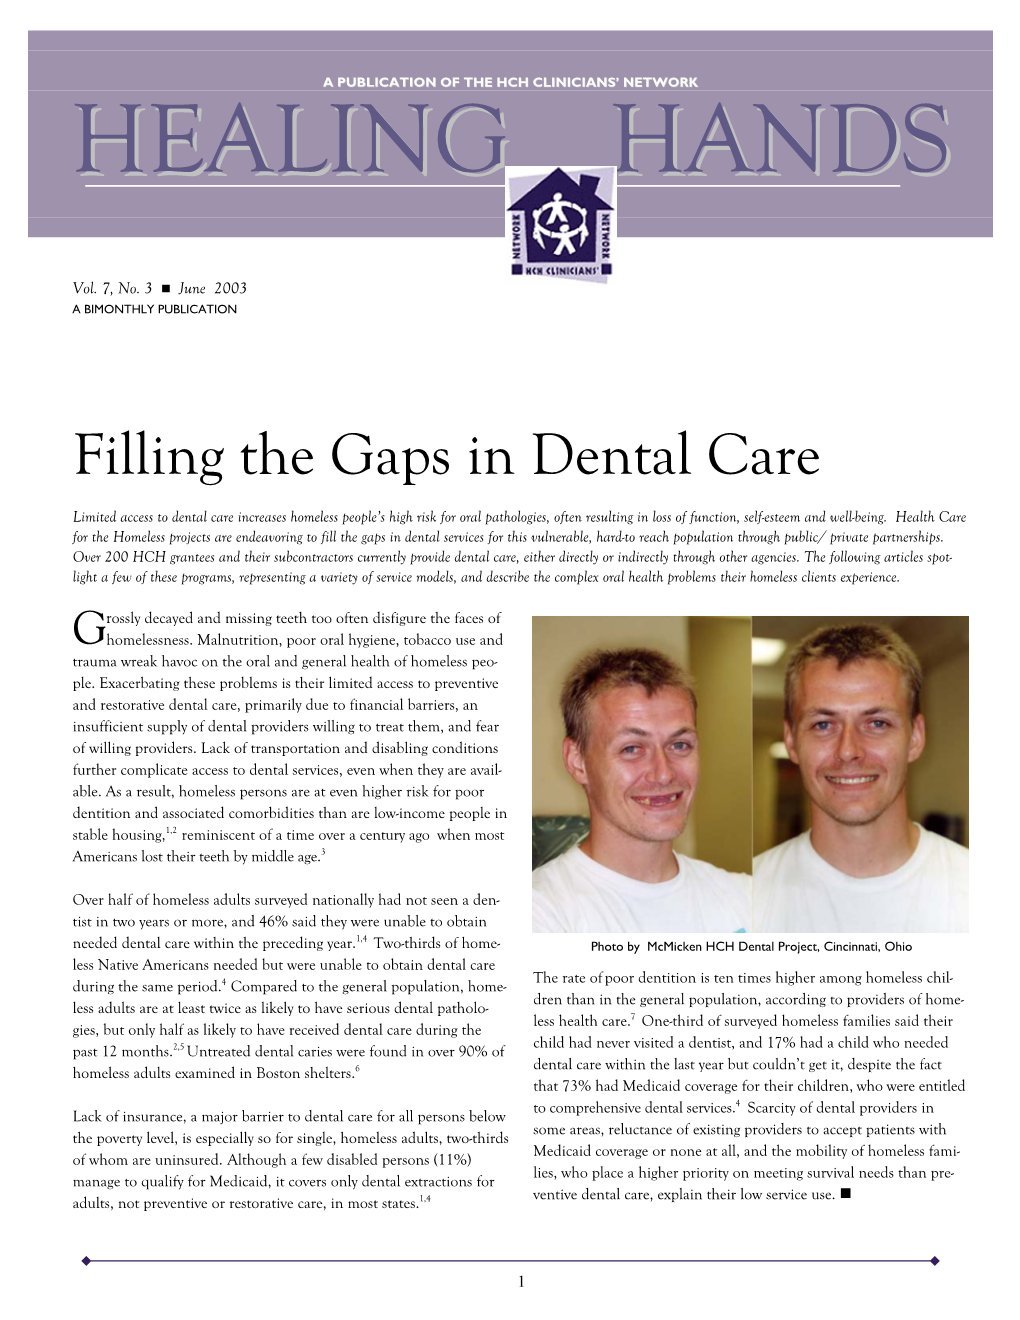 Filling the Gaps in Dental Care